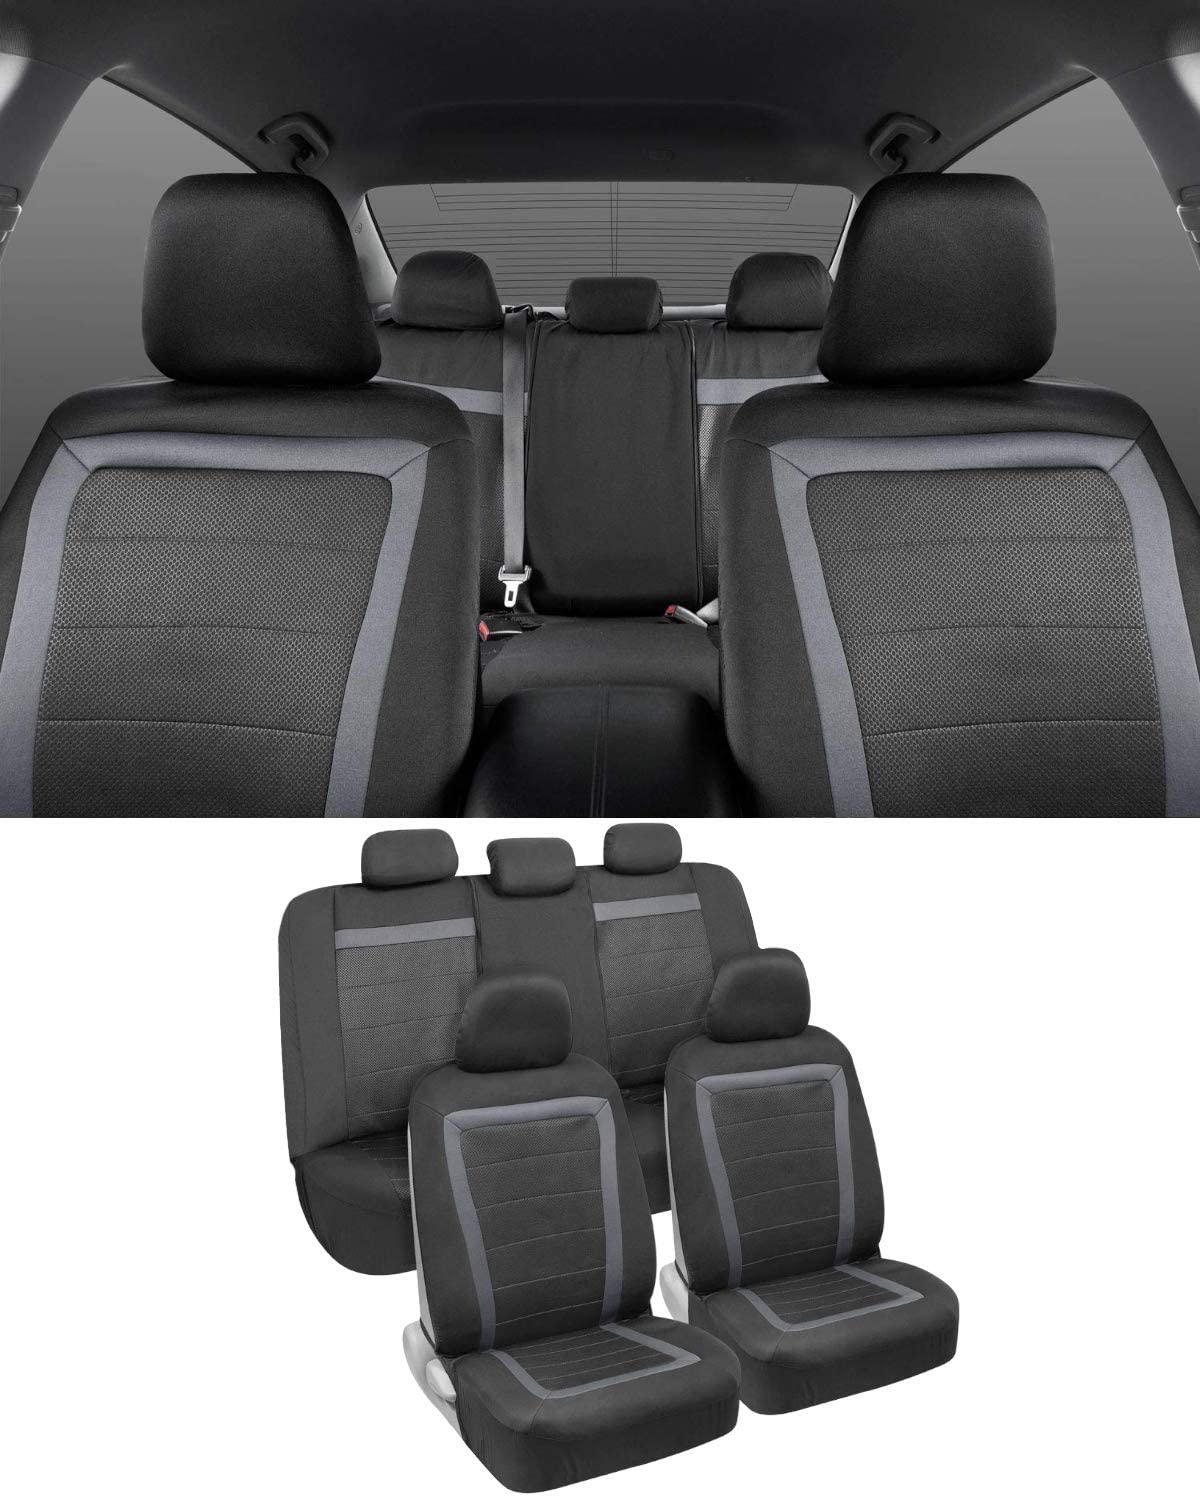 10 Best Seat Covers For Hyundai Elantra - Custom Fit Seat Covers For 2018 Hyundai Elantra